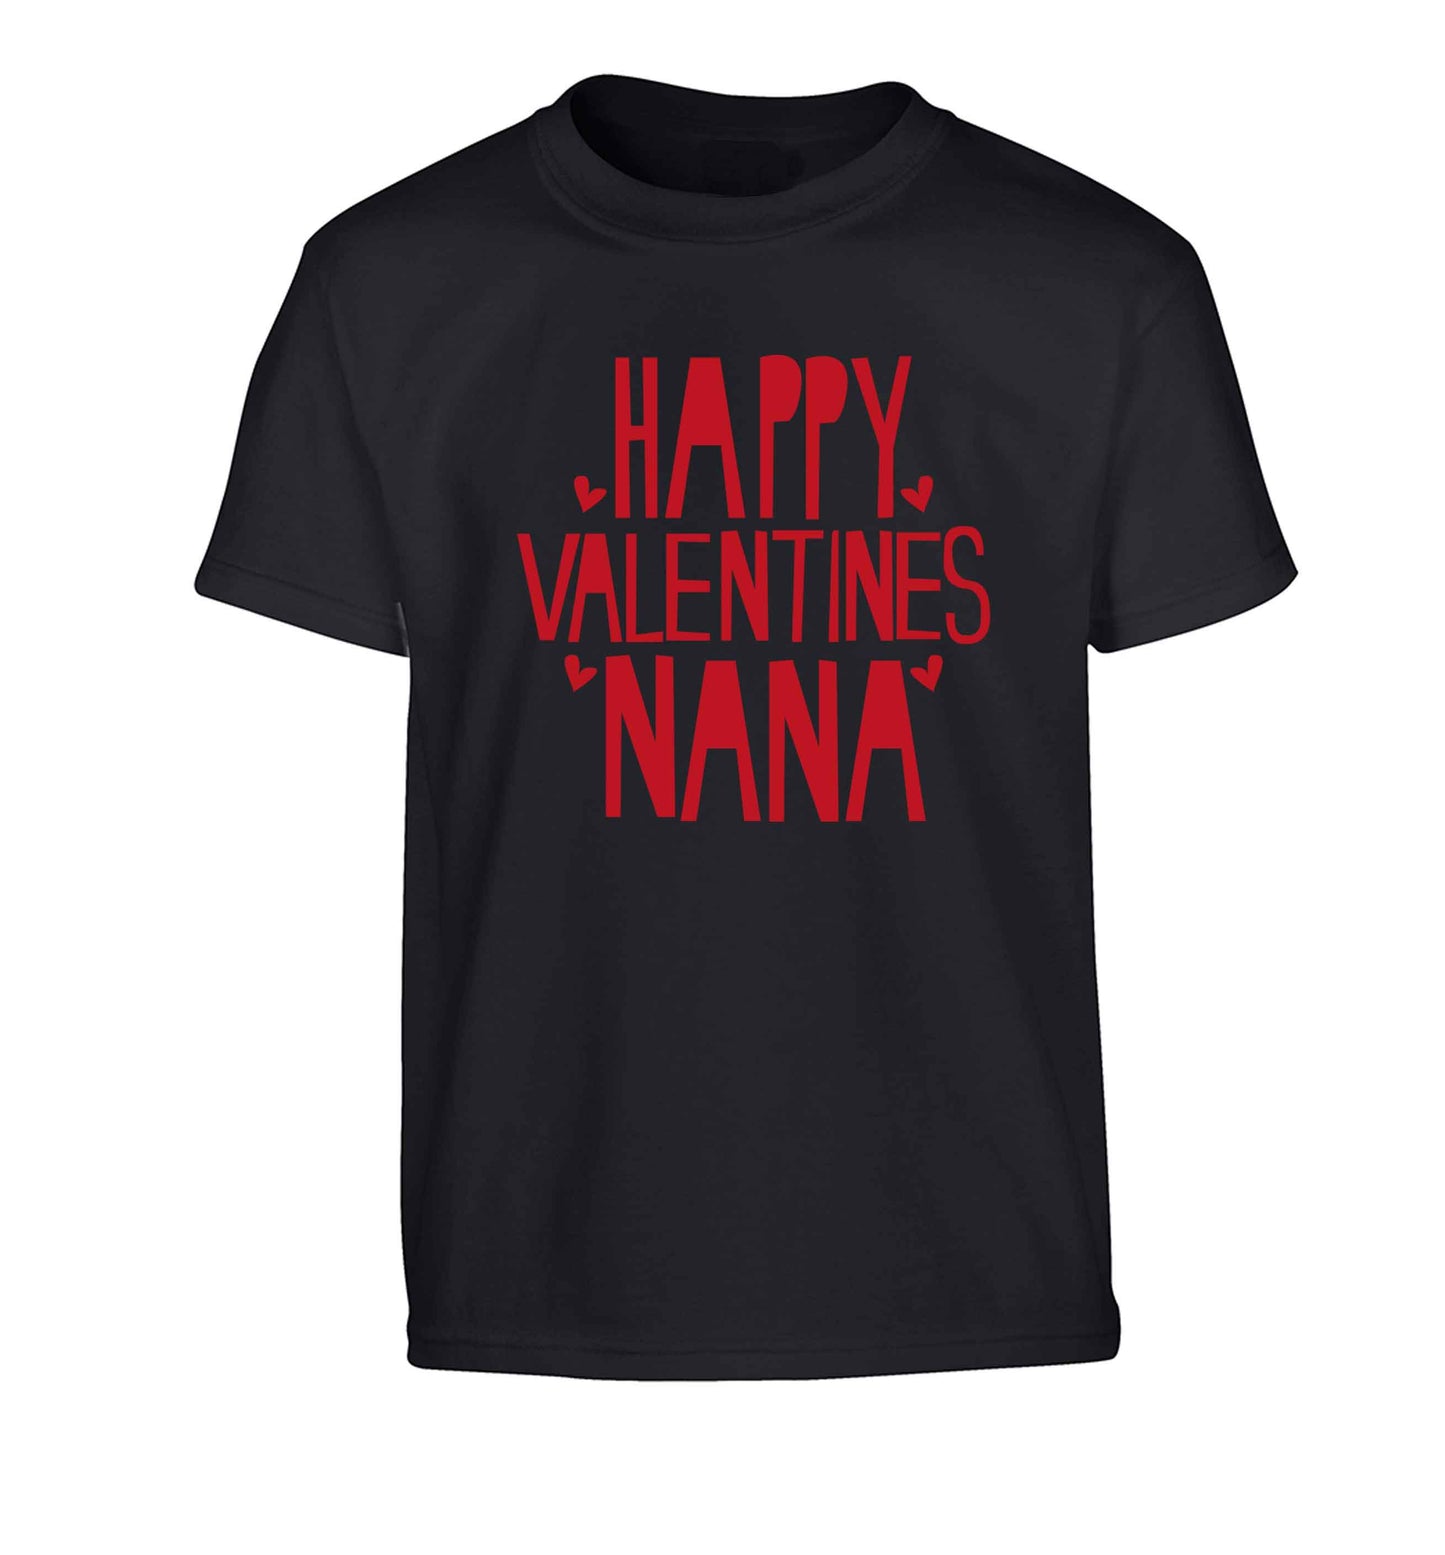 Happy valentines nana Children's black Tshirt 12-13 Years